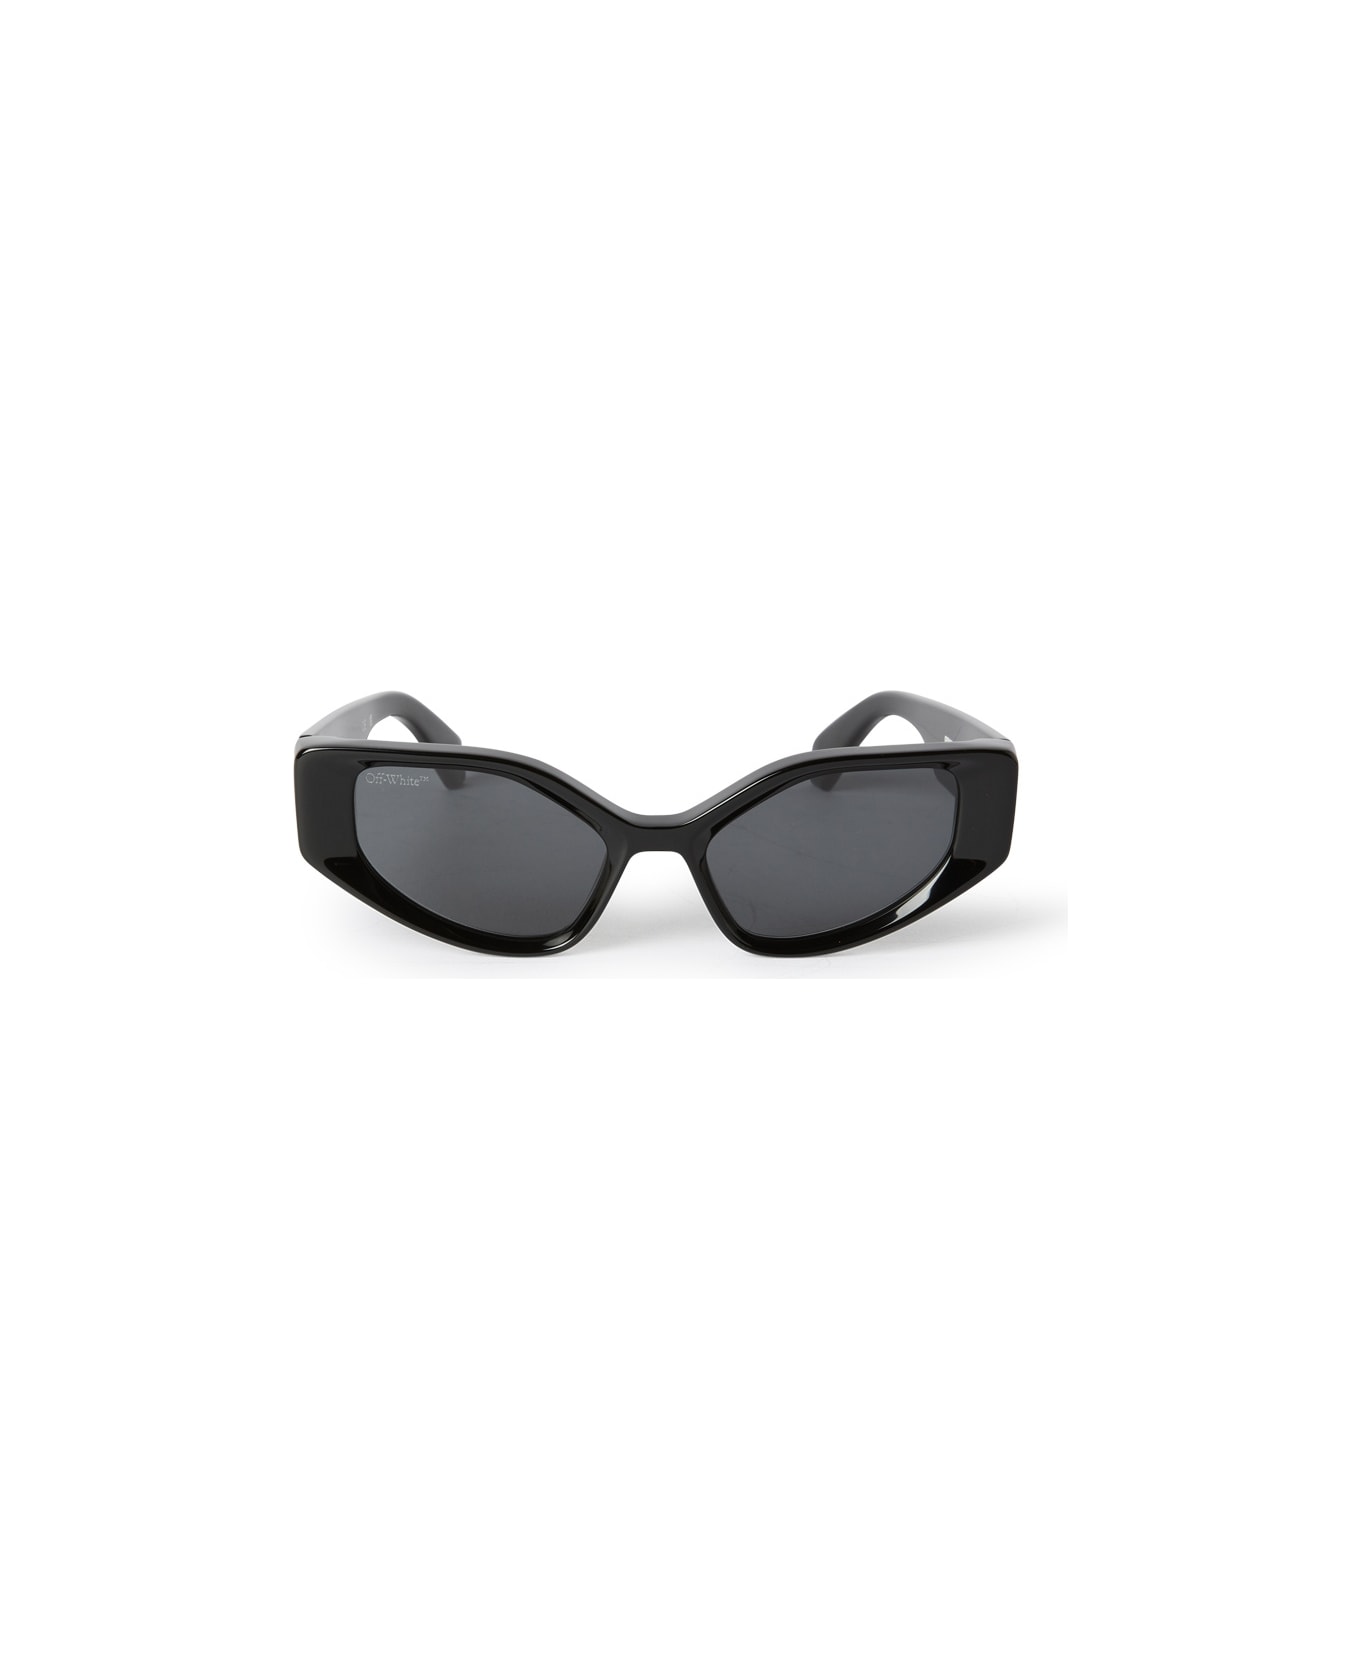 Off-White MEMPHIS SUNGLASSES Sunglasses - Black サングラス